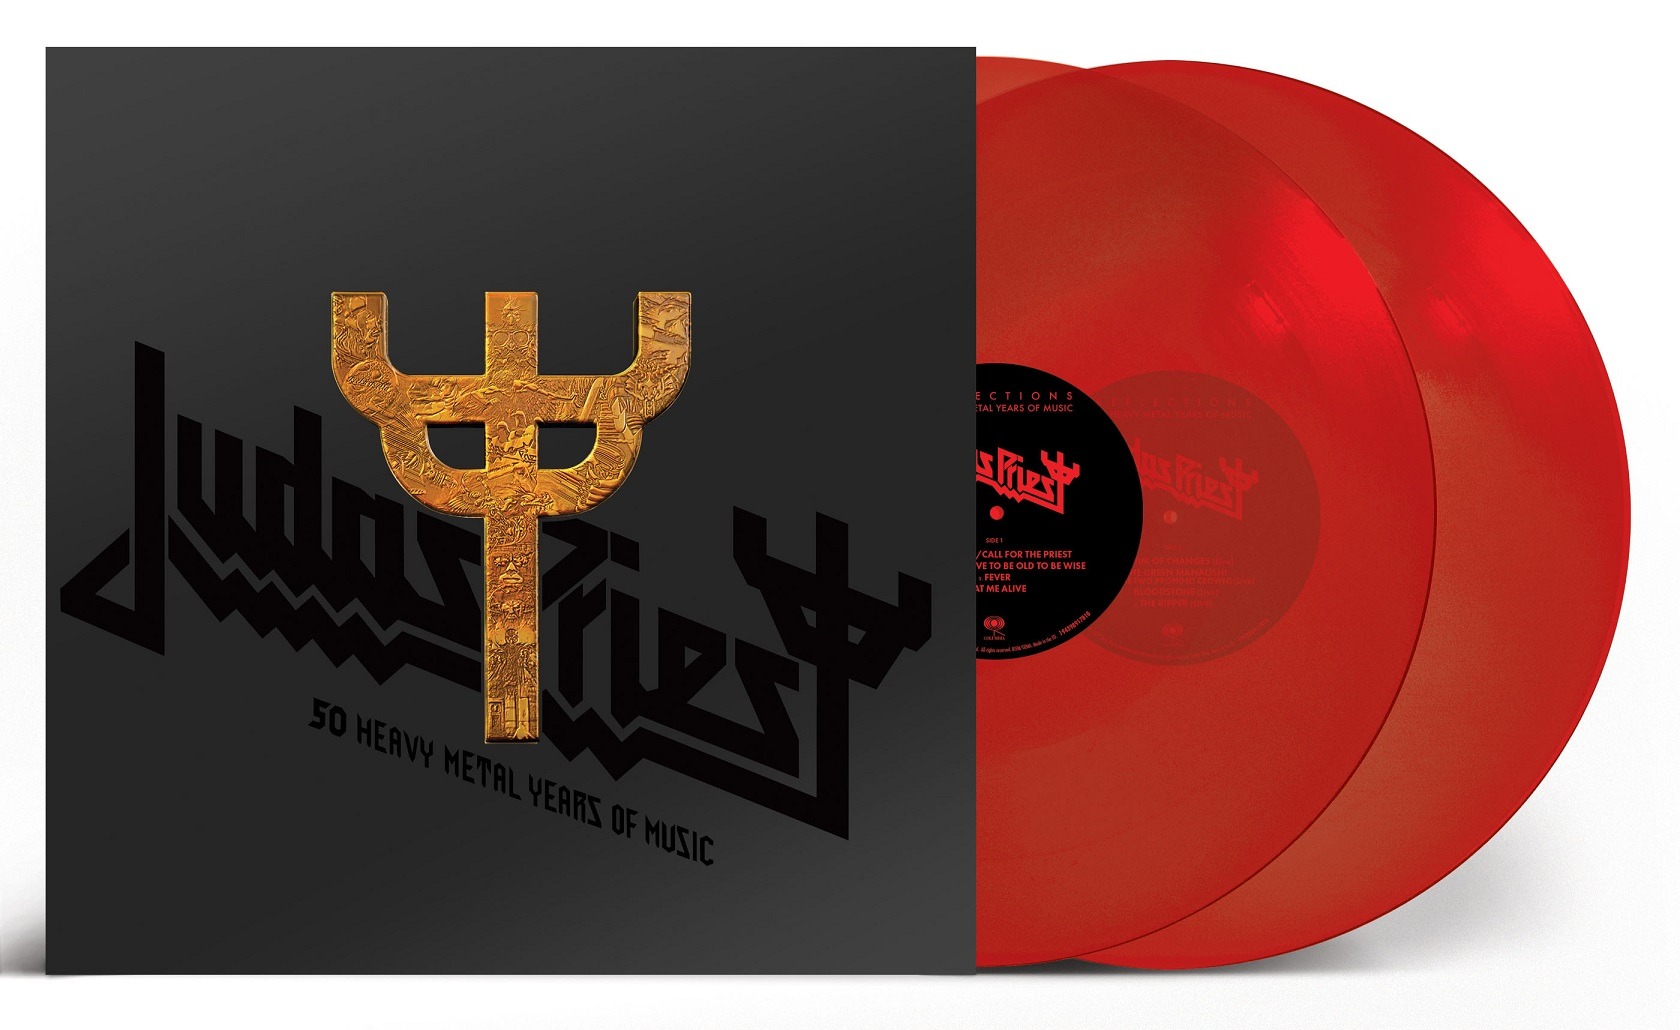 Judas Priest – Reflections 50 Heavy Metal Years Of Music Coloured Red Vinyl (2 LP)